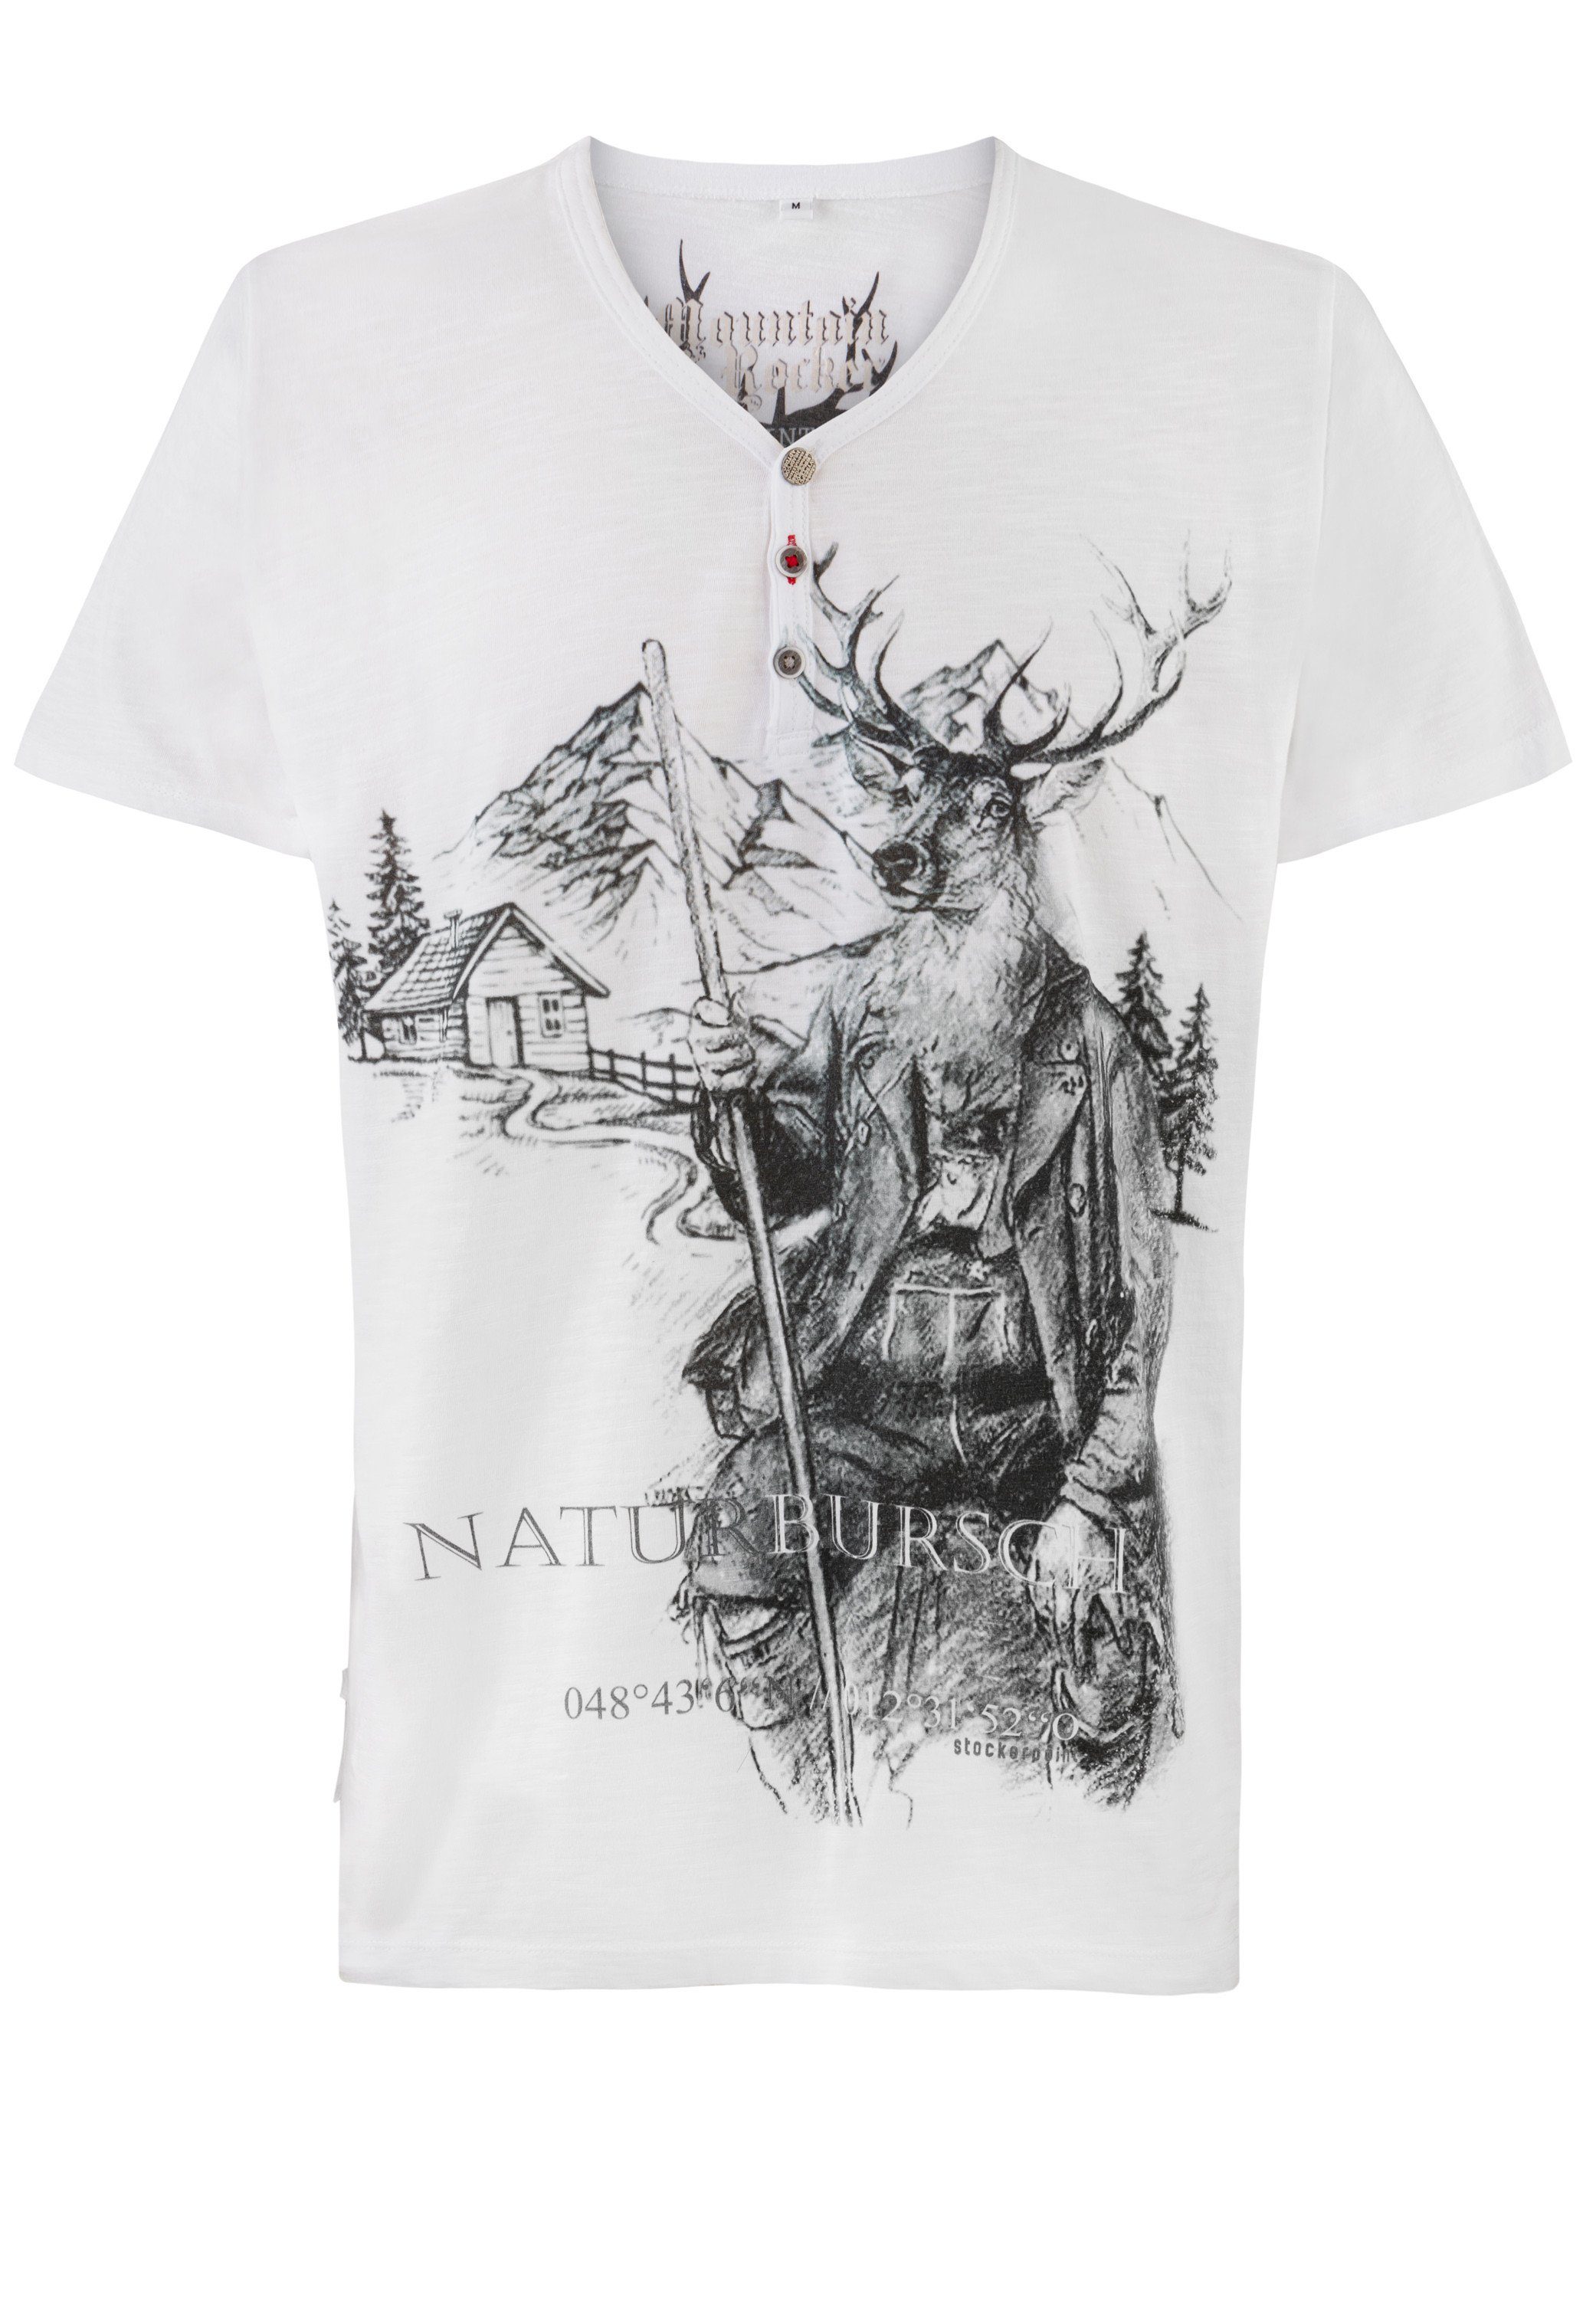 Stockerpoint T-Shirt Naturbursch stein